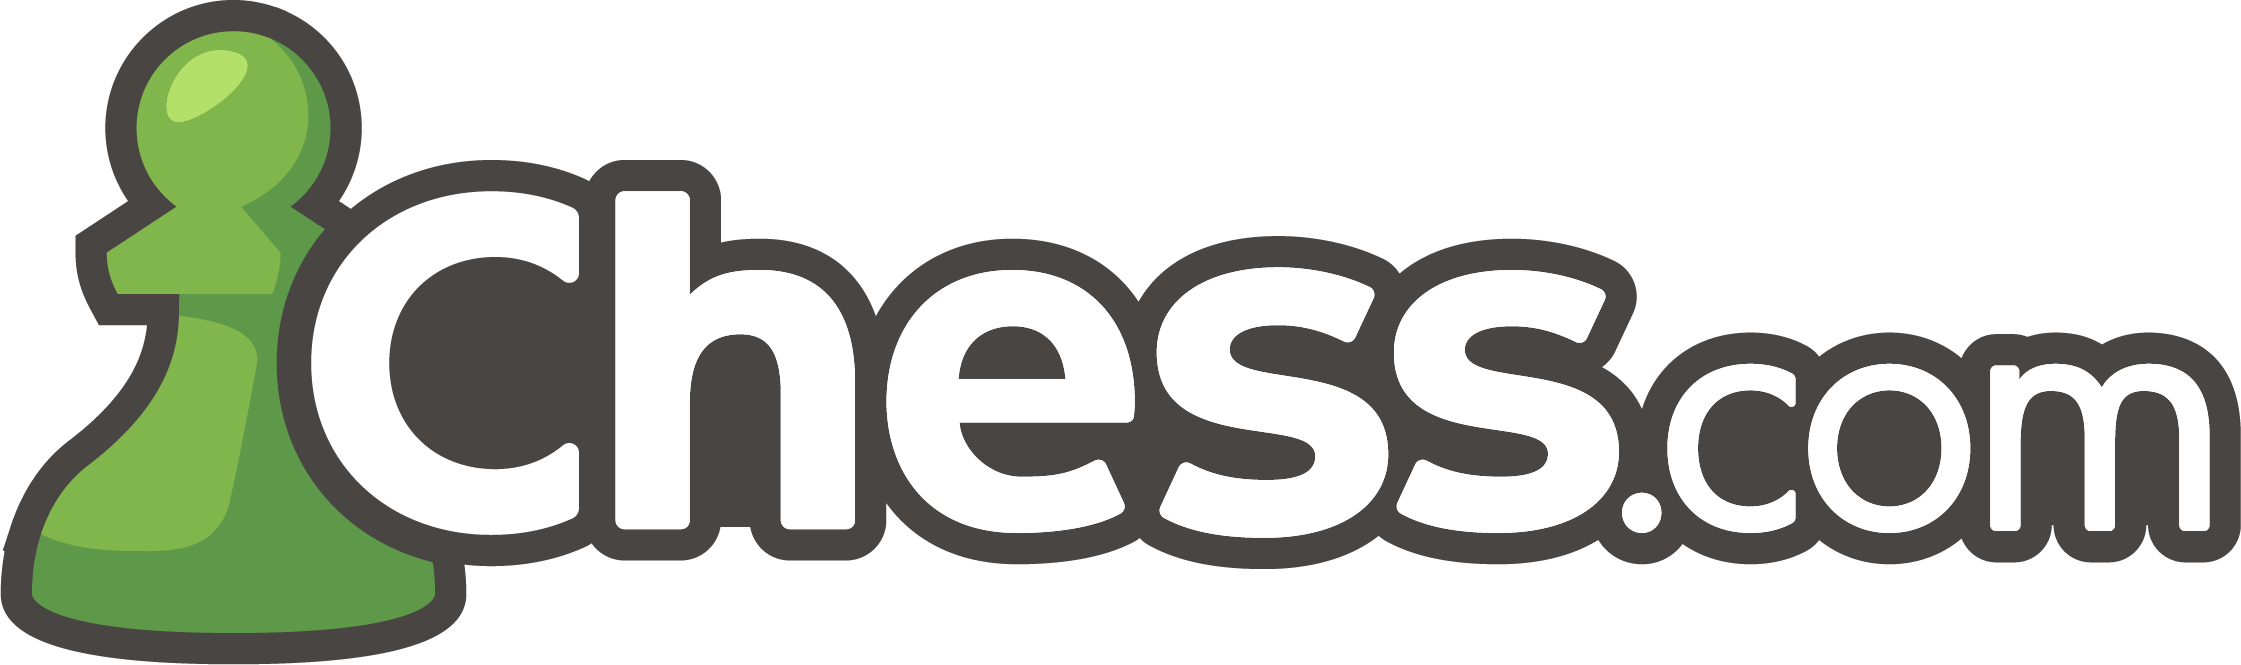 Chesscom Logo Filled4x.png?width=2241&height=665